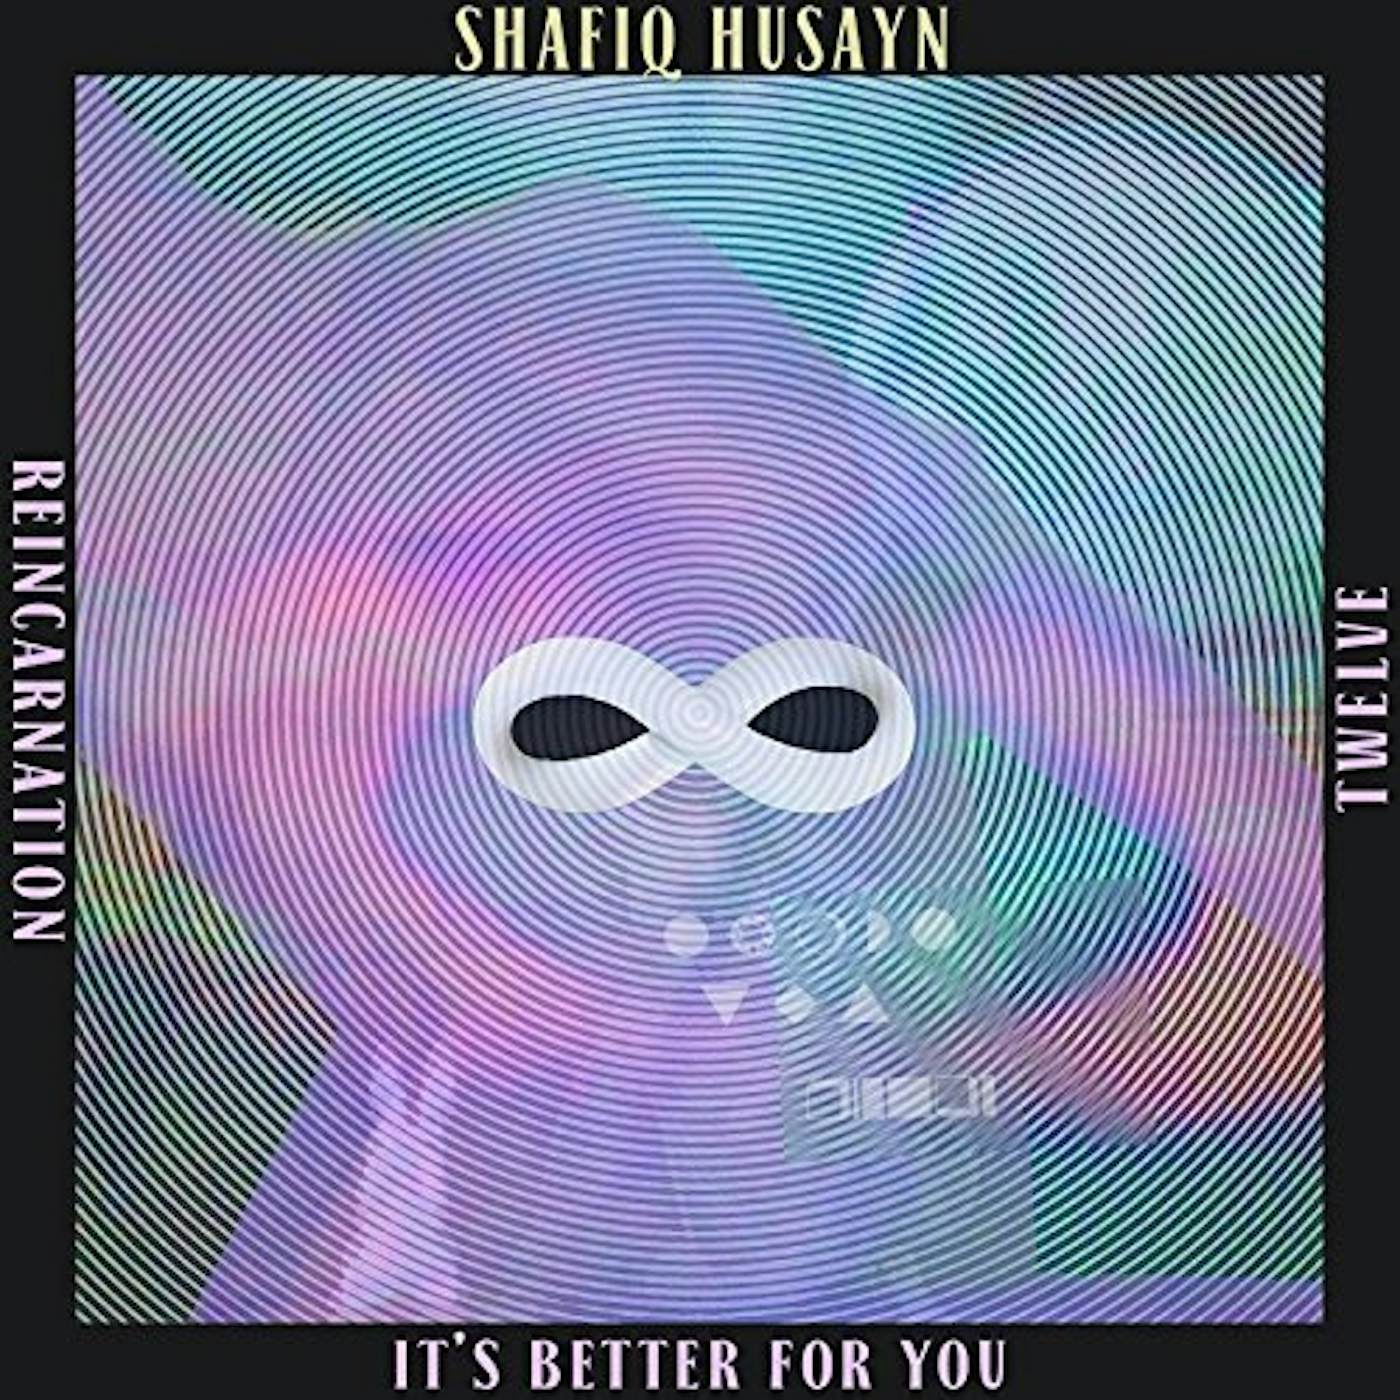 Shafiq Husayn IT'S BETTER FOR YOU Vinyl Record